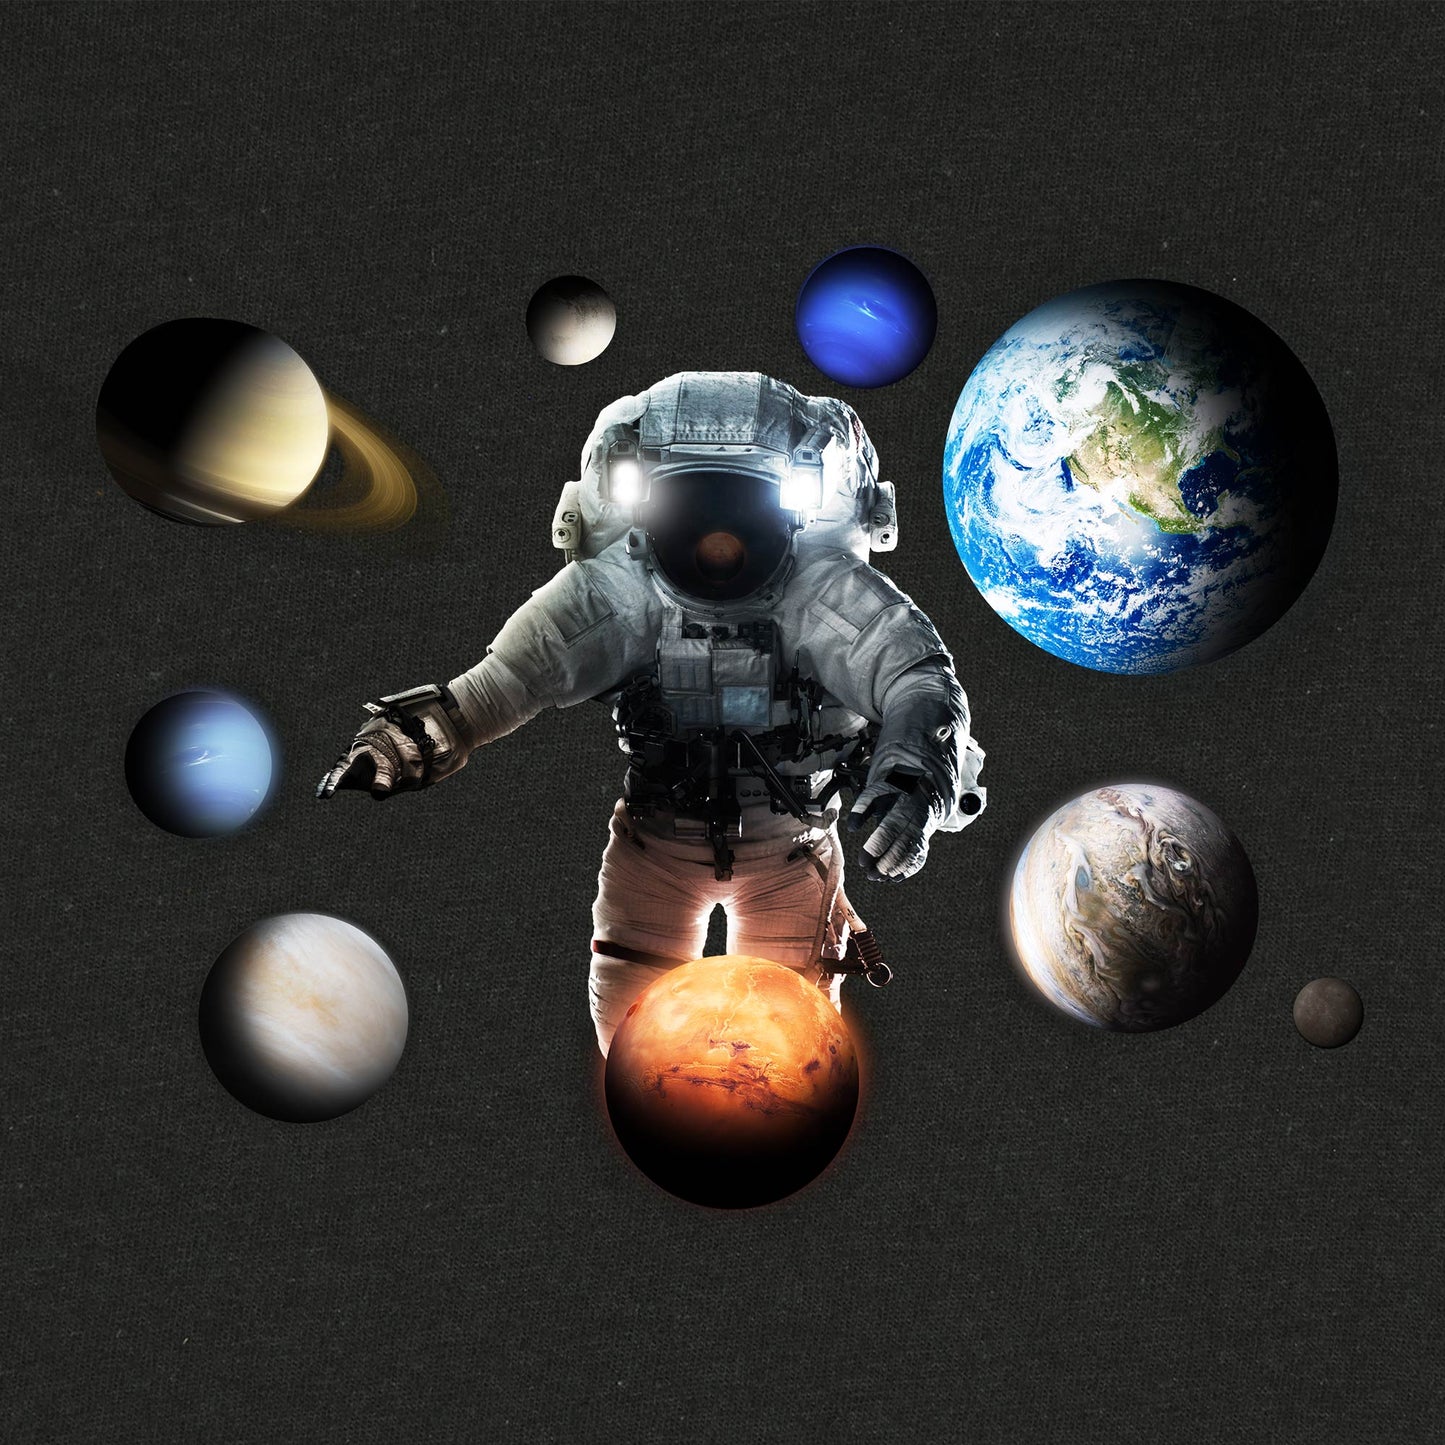 Dalix Planets Graphic T-Shirt